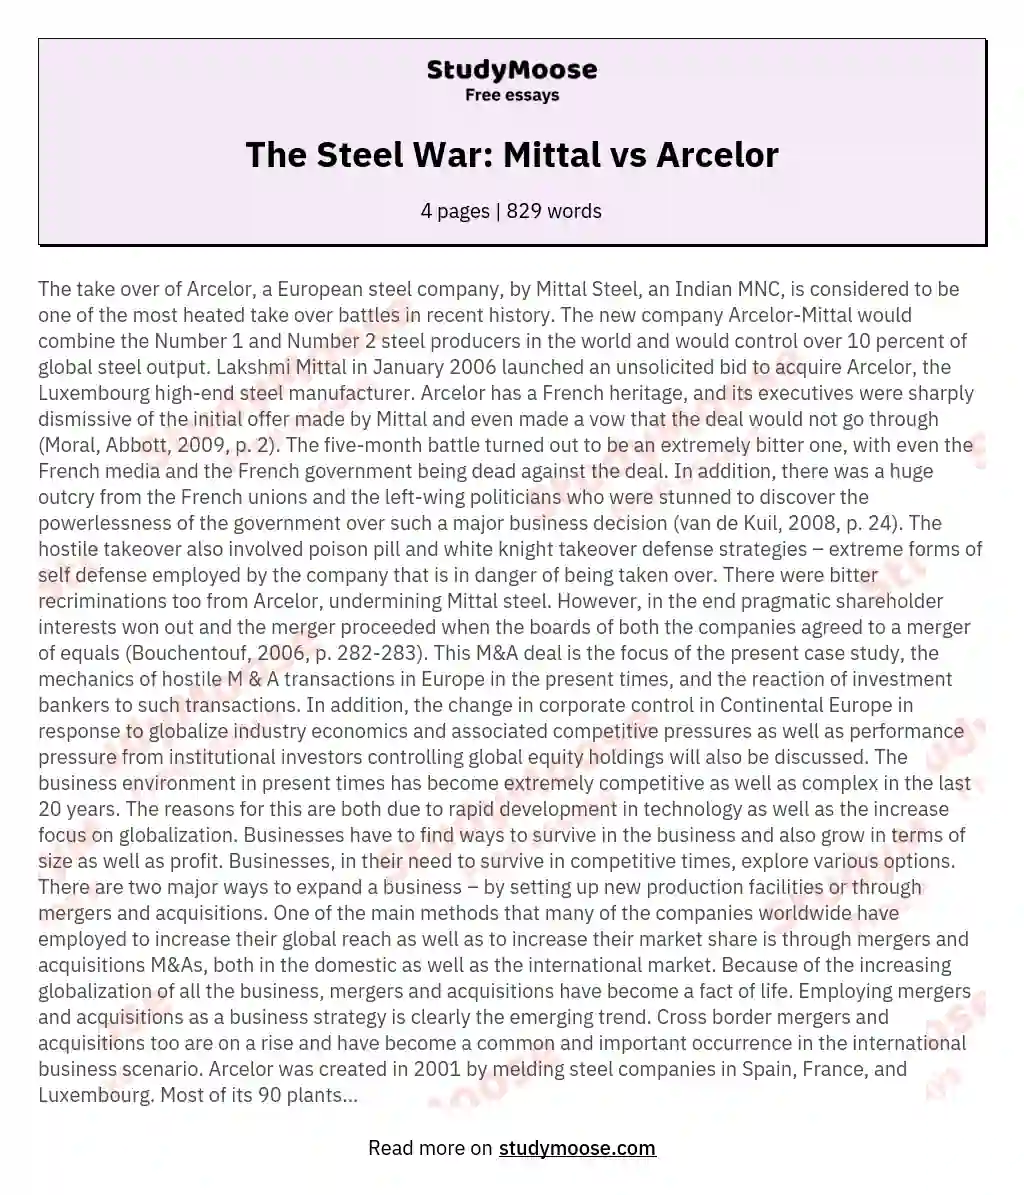 The Steel War: Mittal vs Arcelor essay